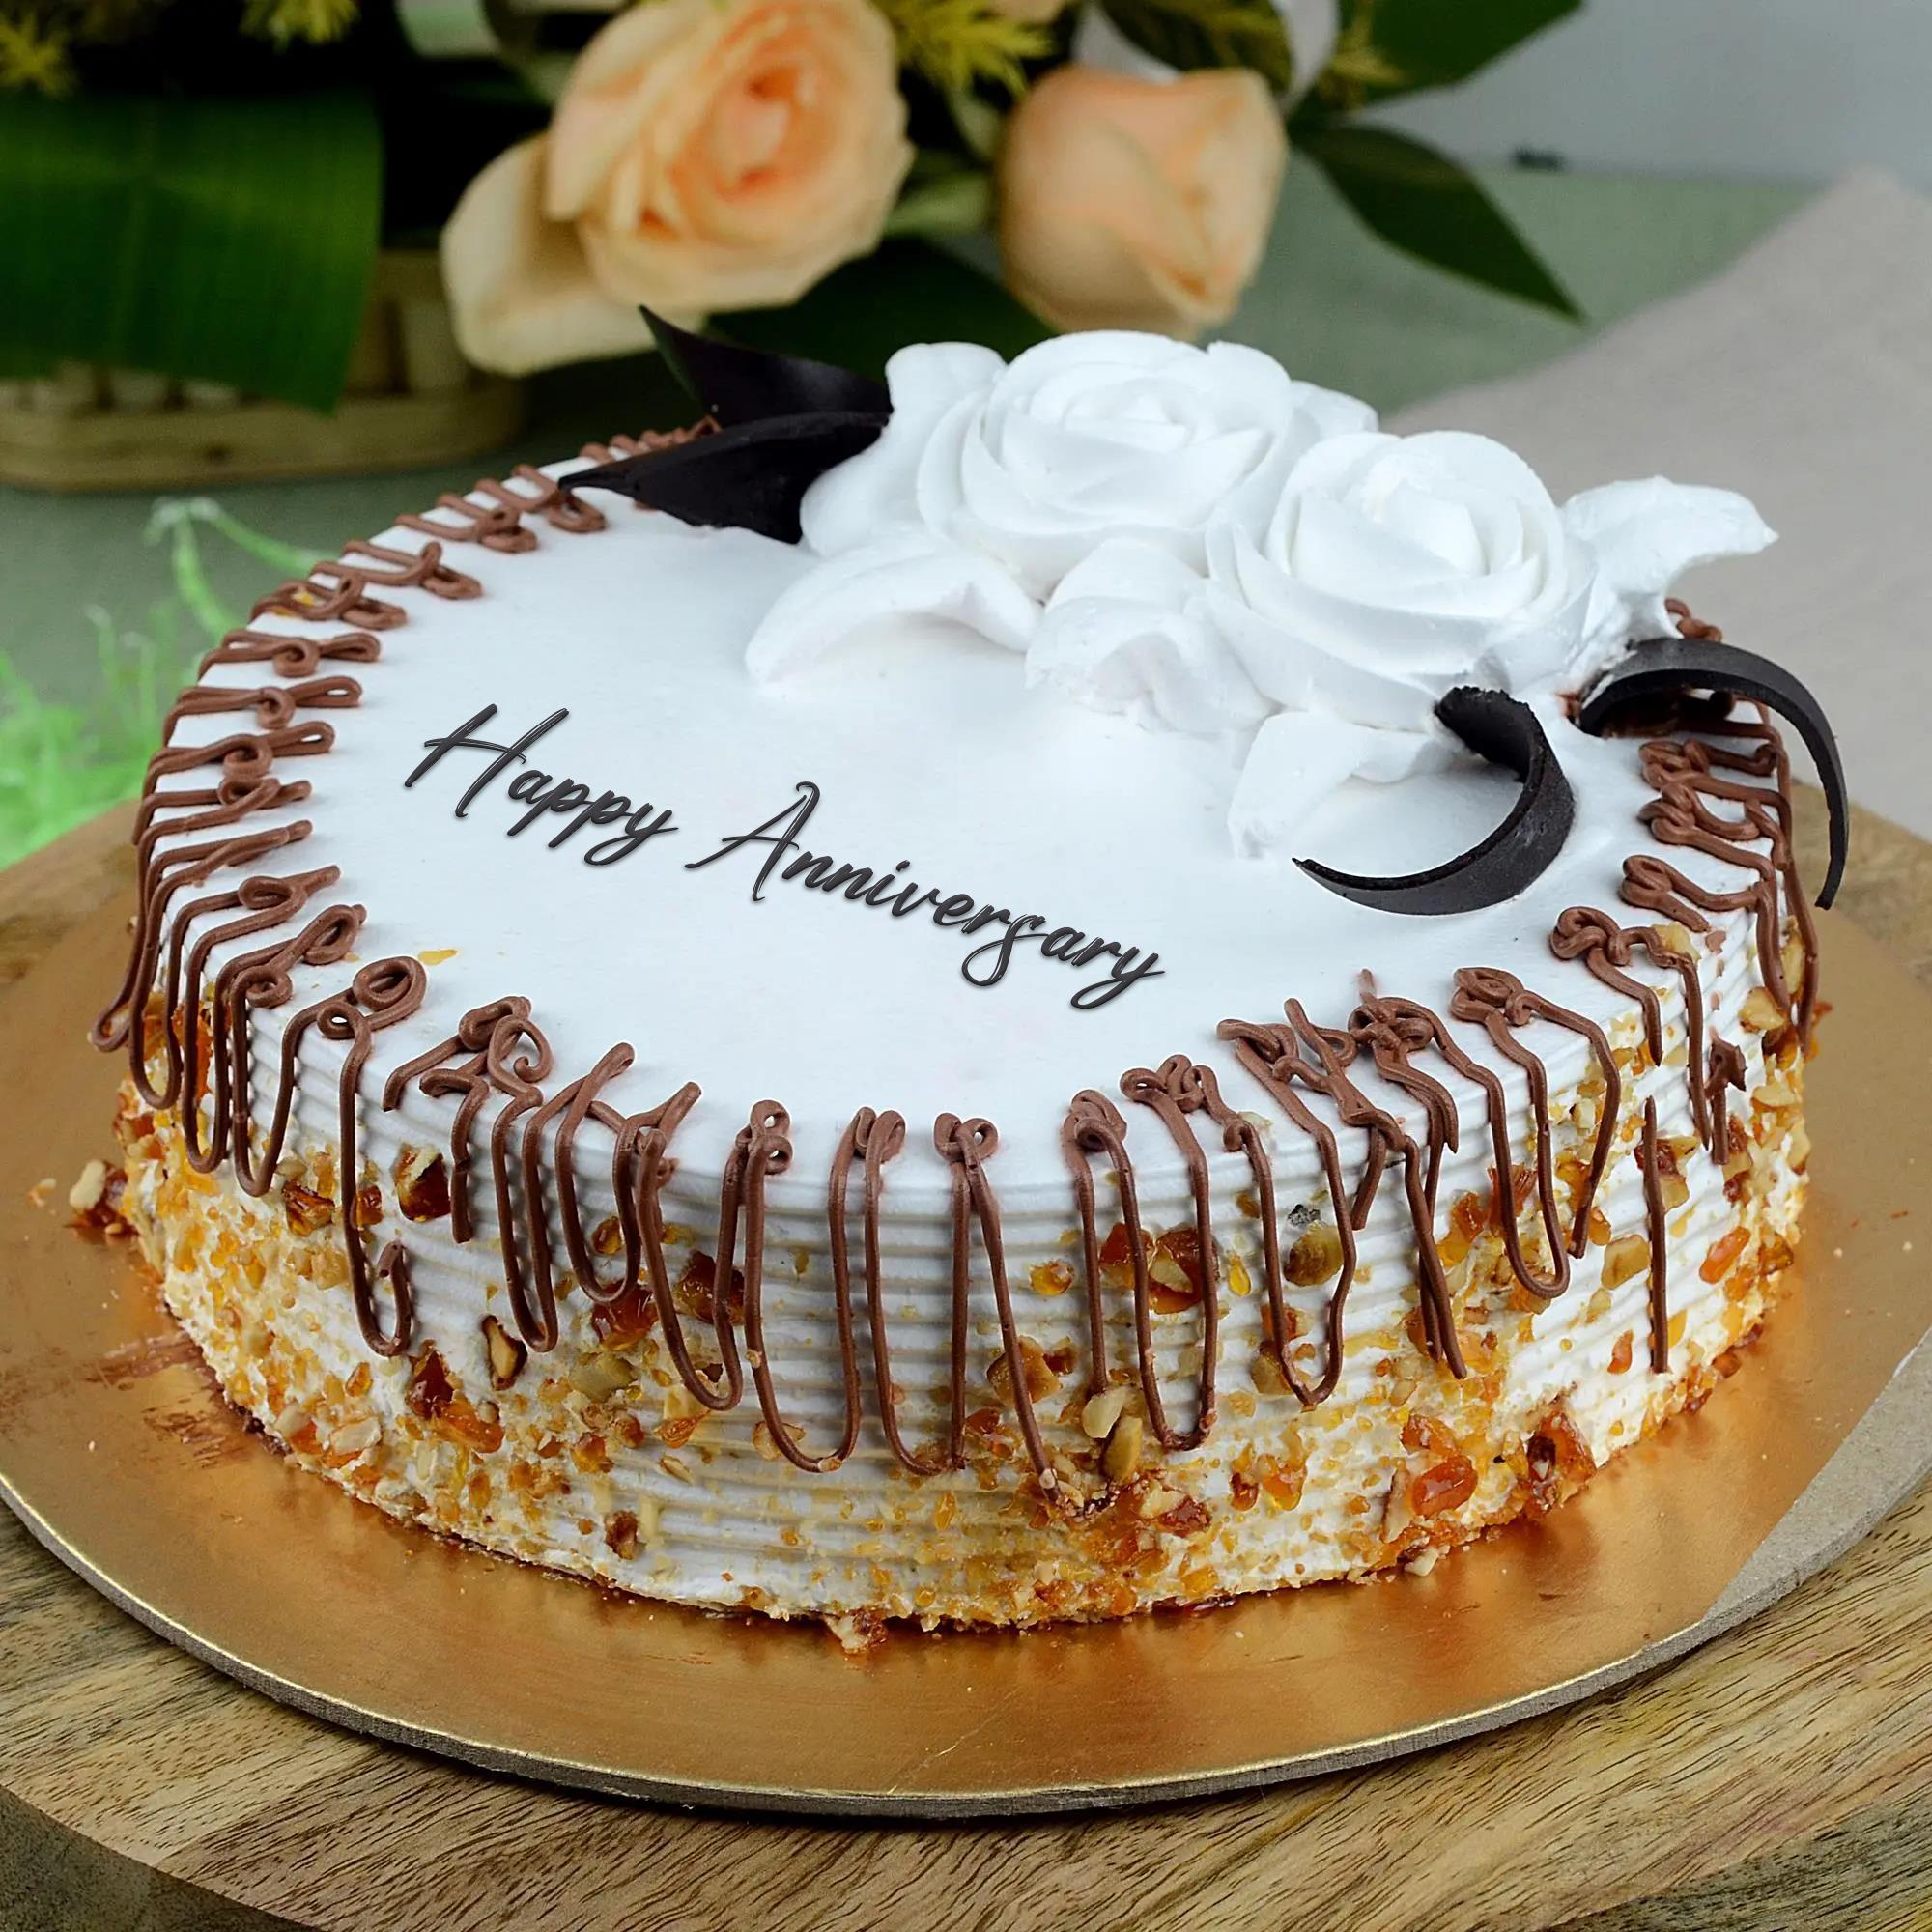 Discover 84+ 25th anniversary cake ideas best - in.daotaonec